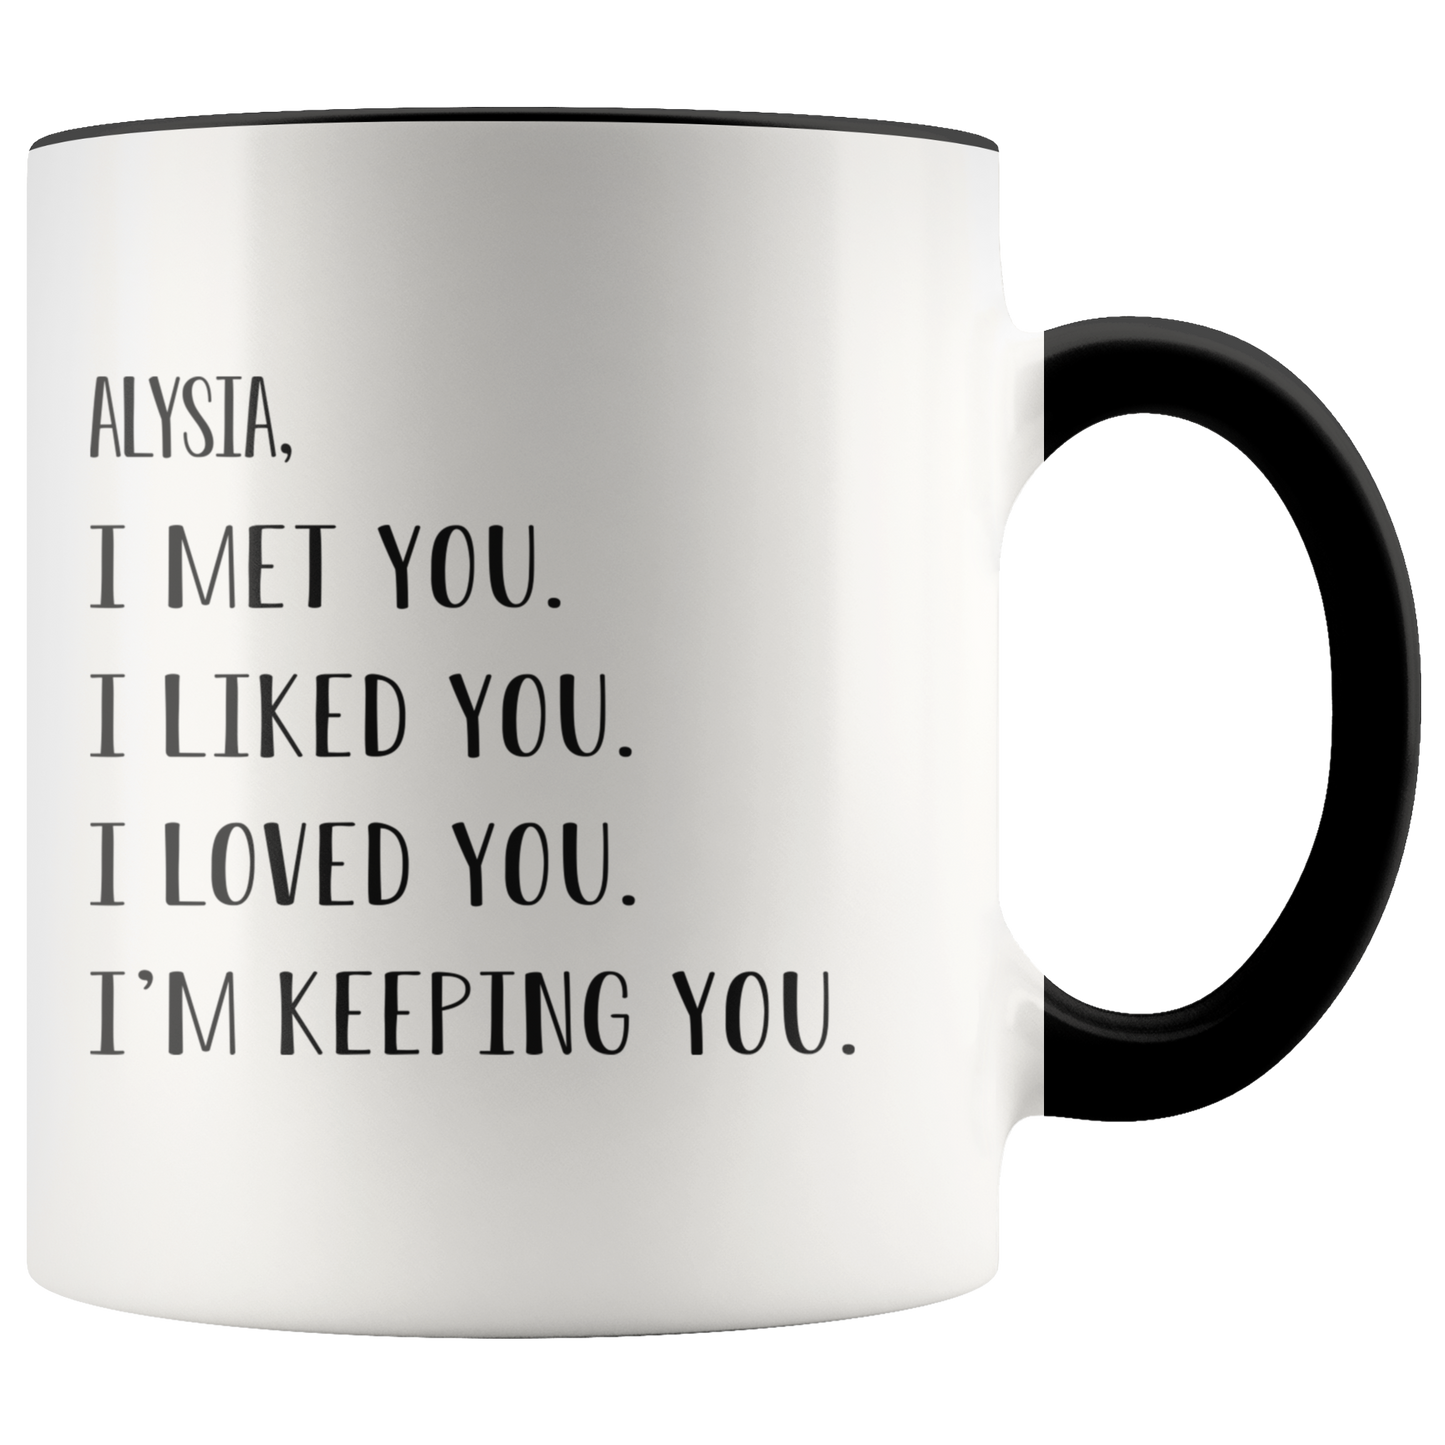 MUG01221292402-sp-22999 - Valentine Day Coffee Mug For Alysia - I Met You, I Like You,